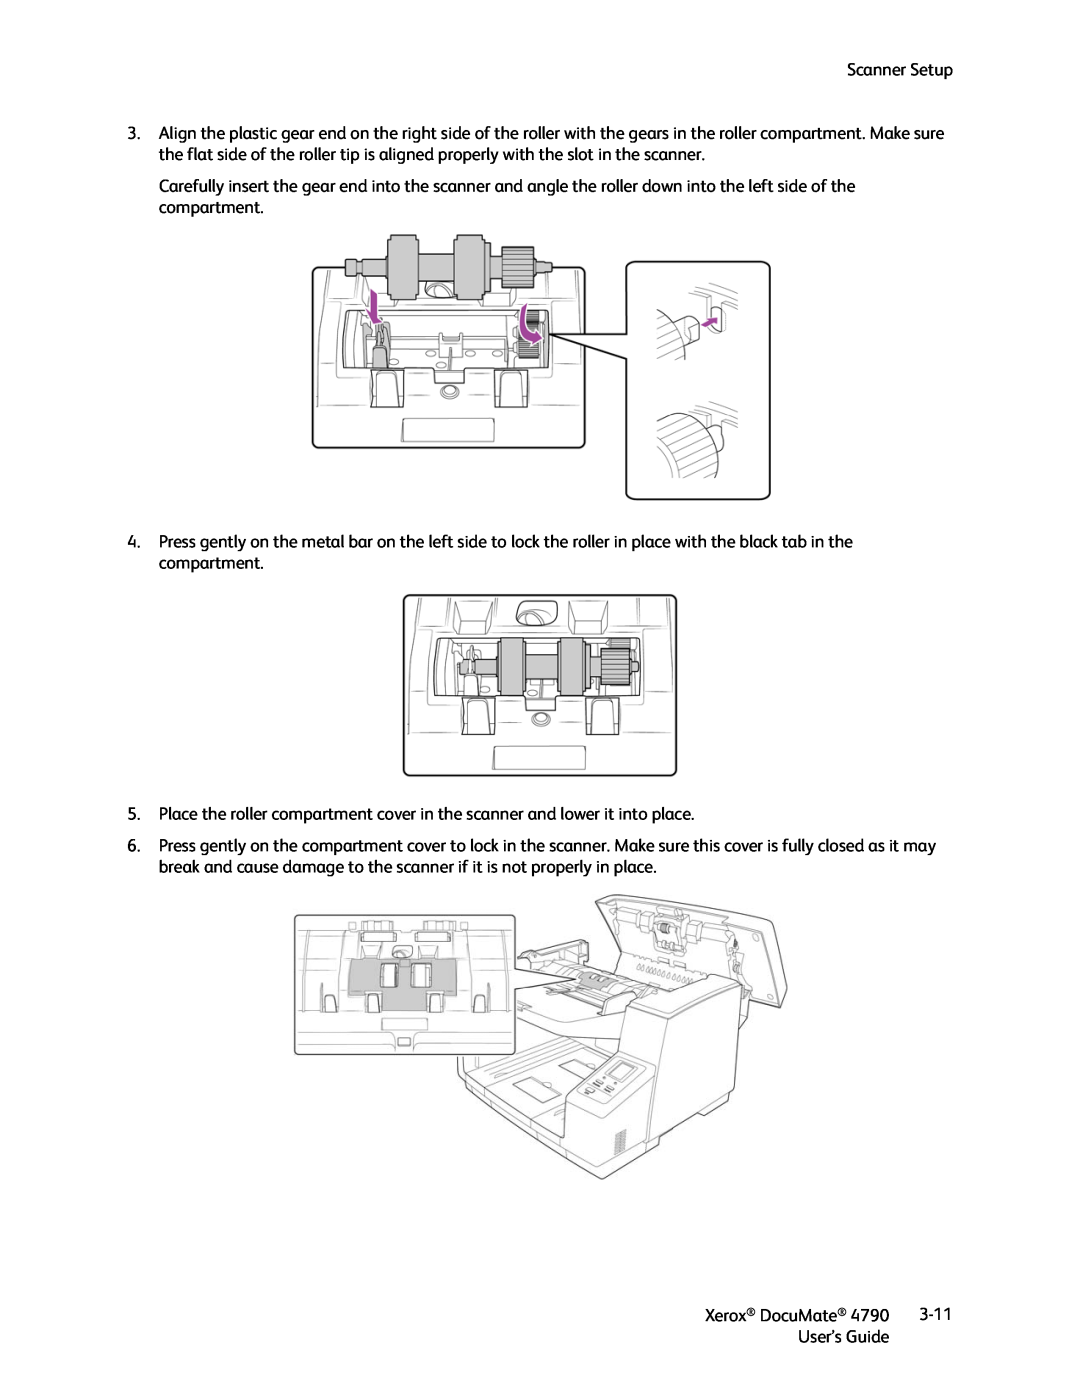 Xerox xerox documate manual Scanner Setup, Xerox DocuMate, 3-11, User’s Guide 